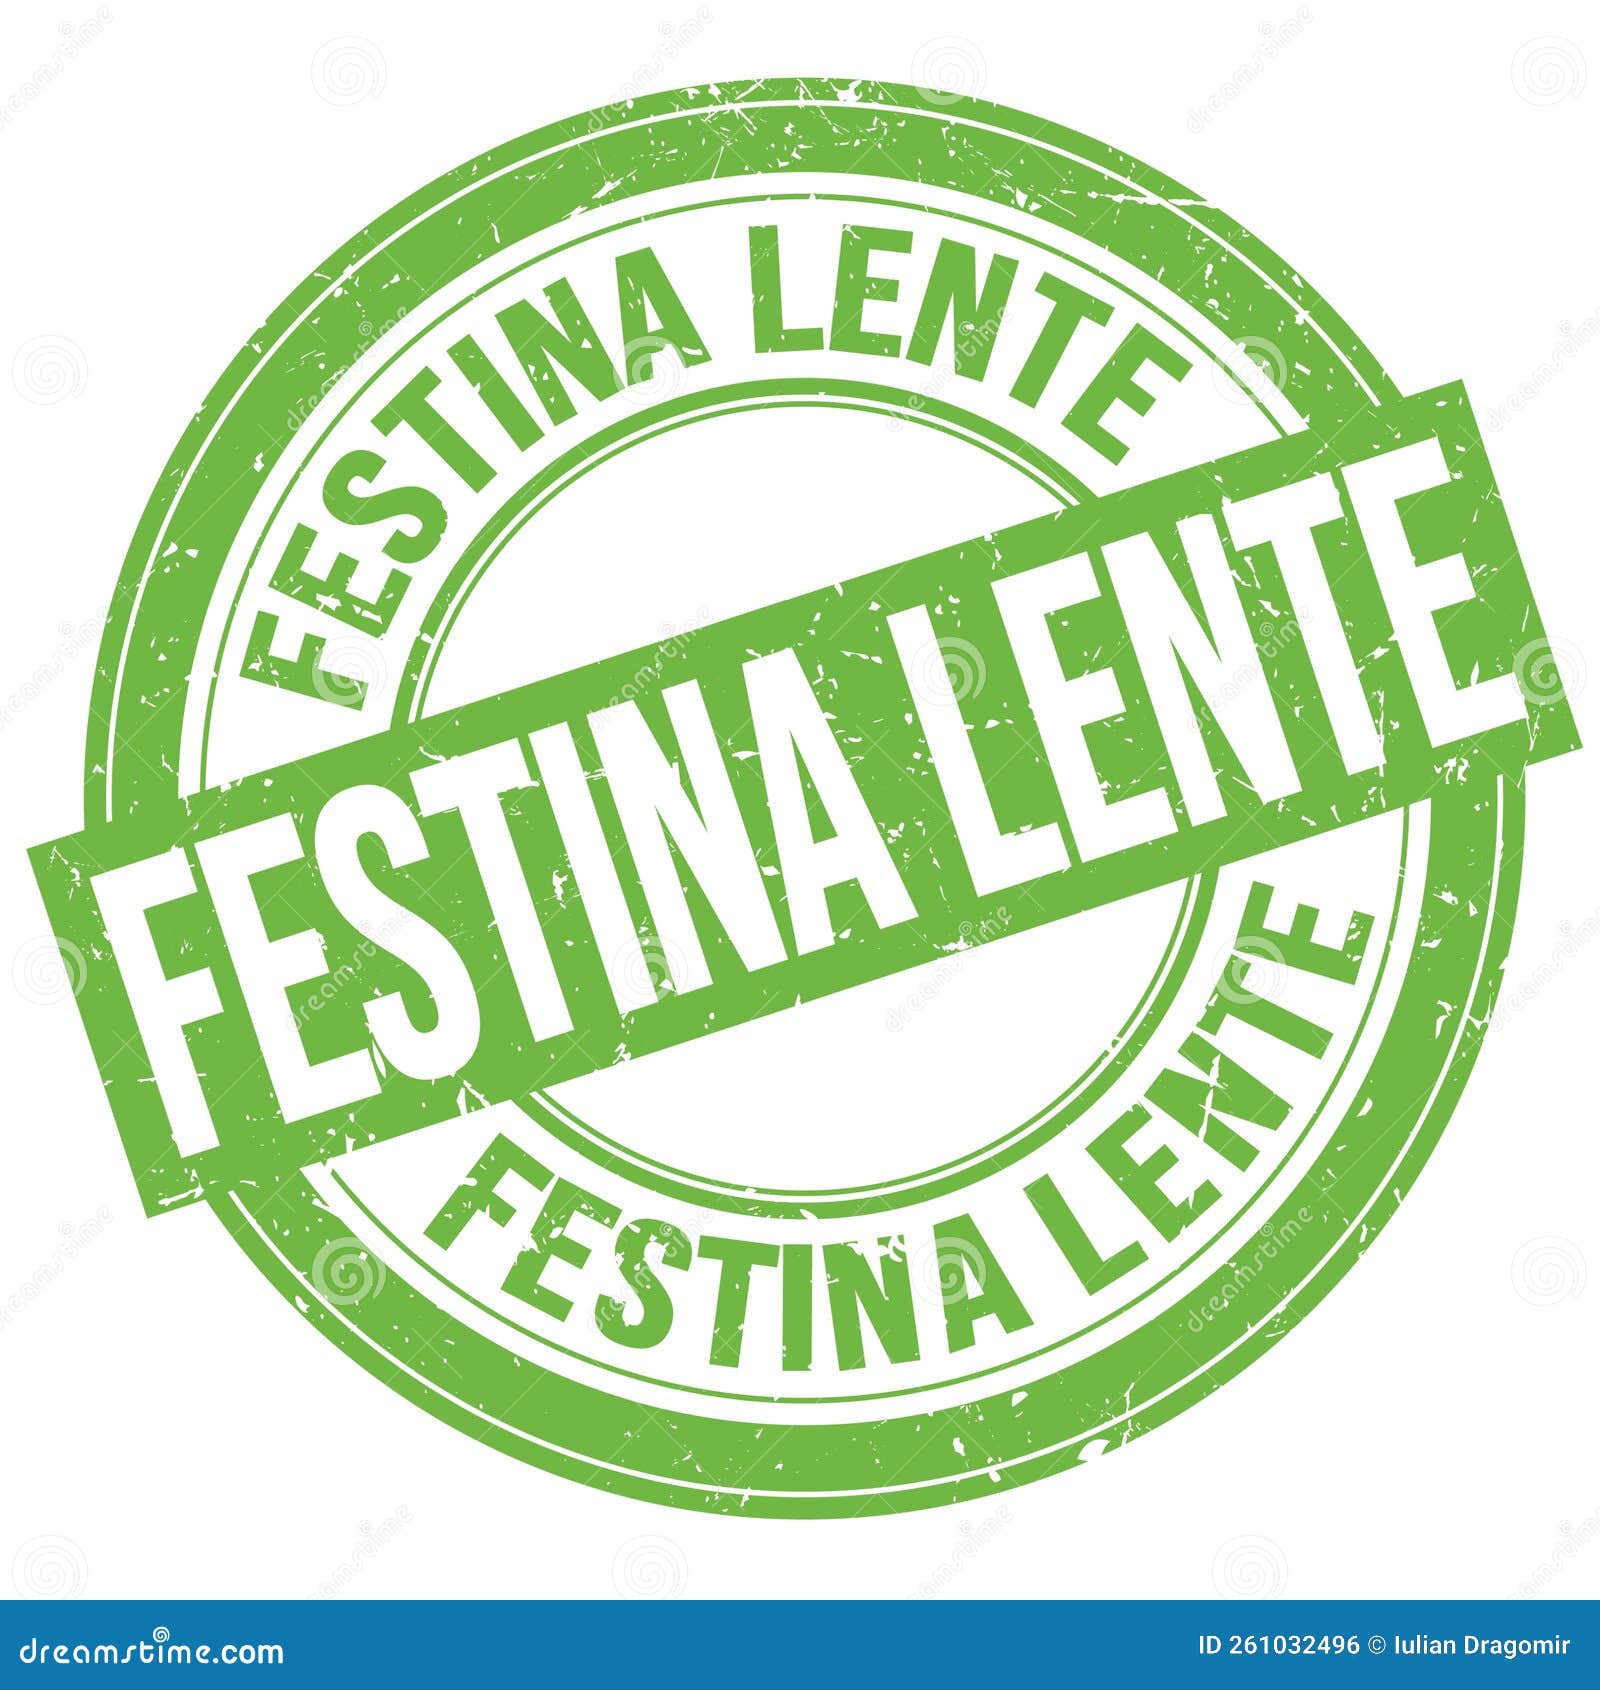 festina lente text written on green round stamp sign